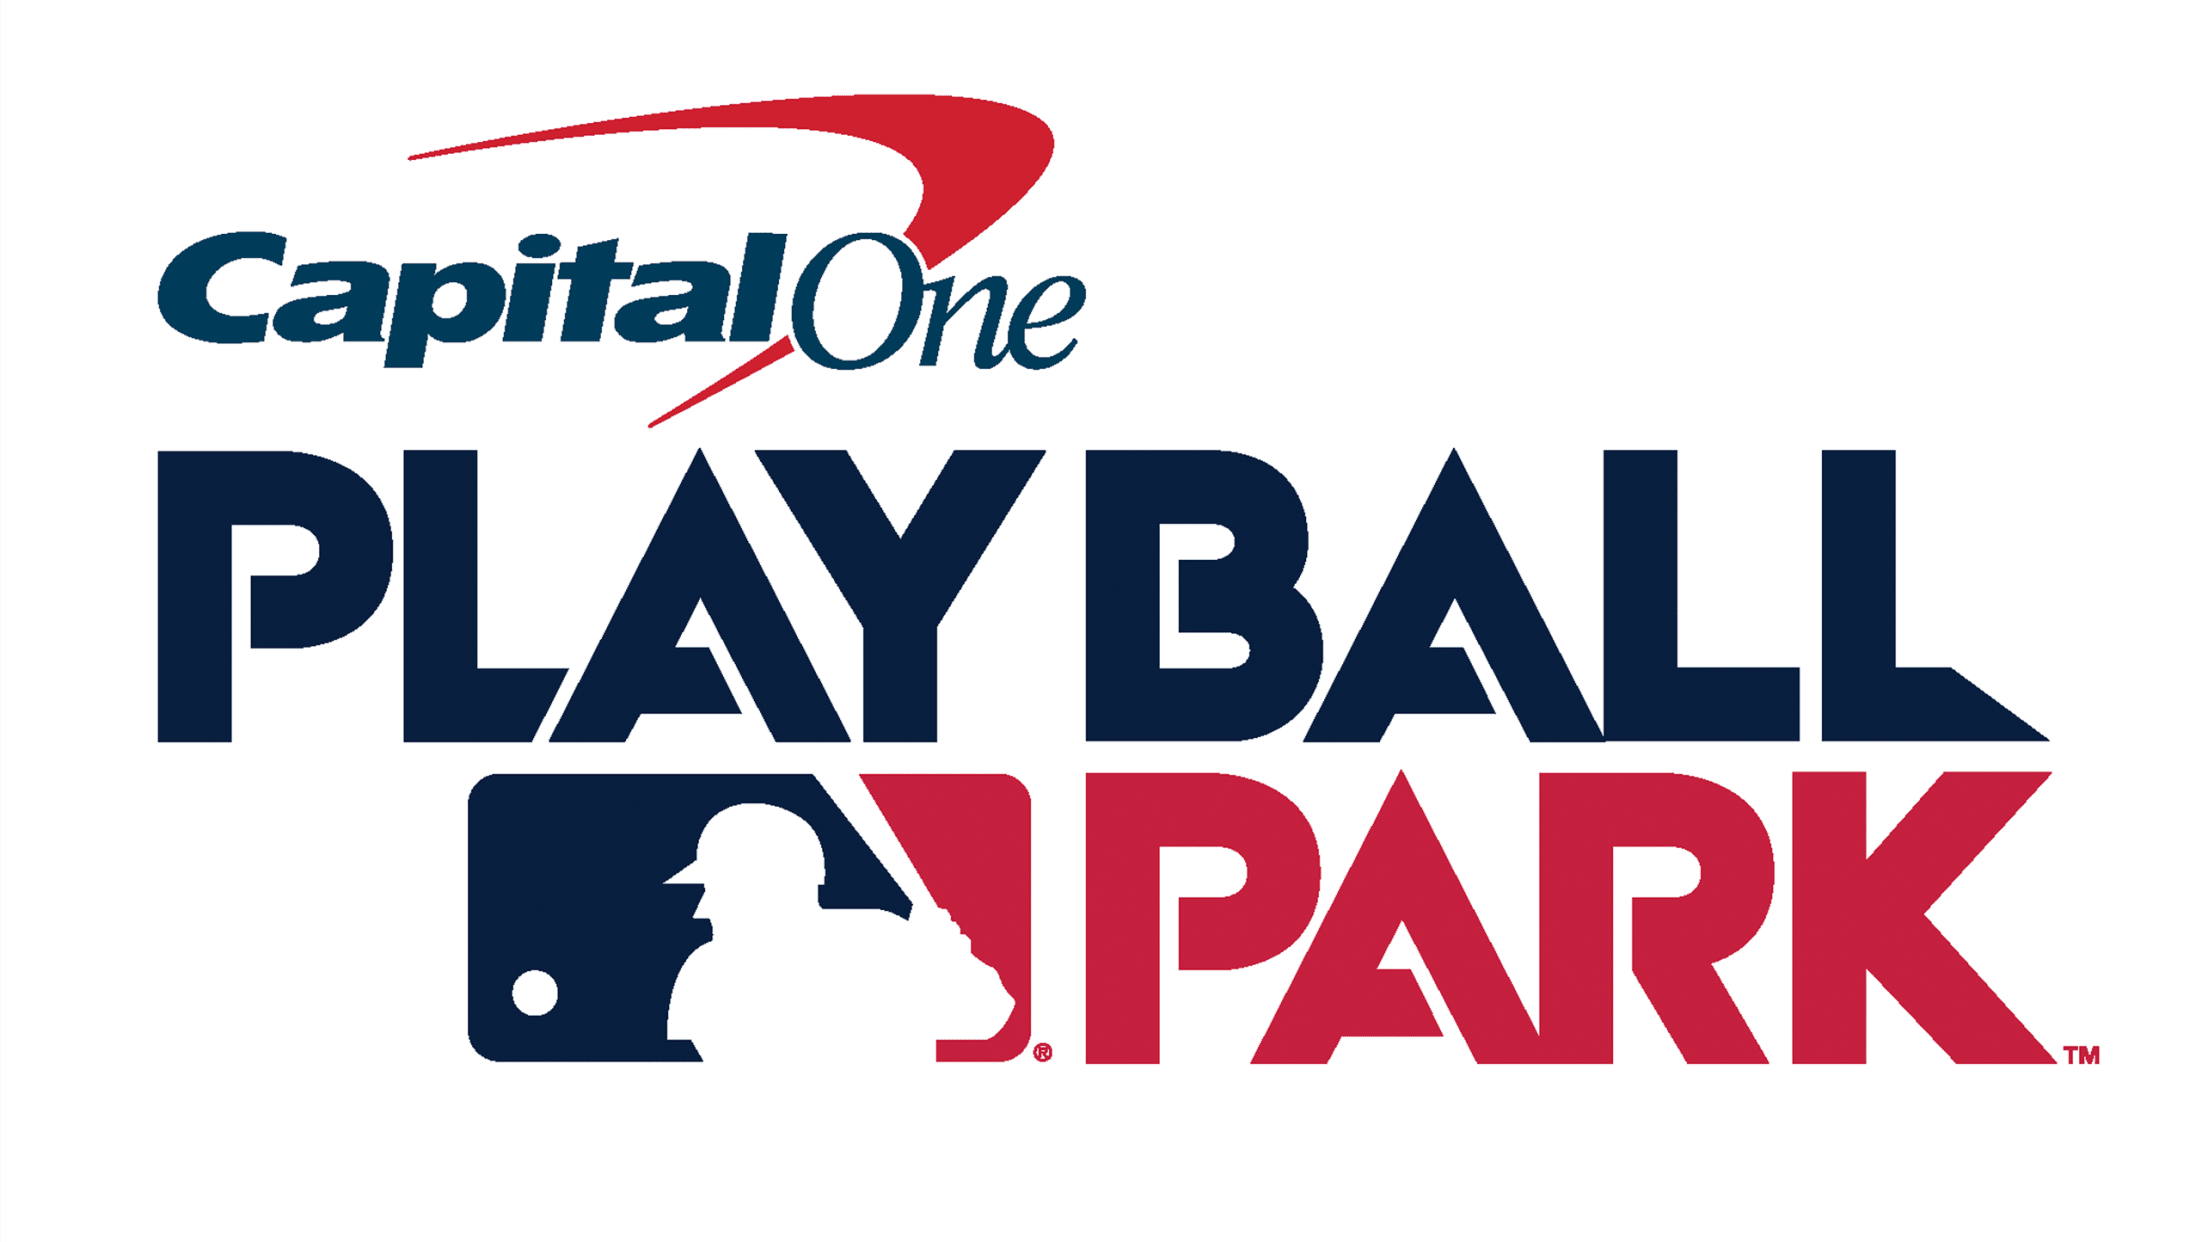 Apply, MLB All-Star Experience Team